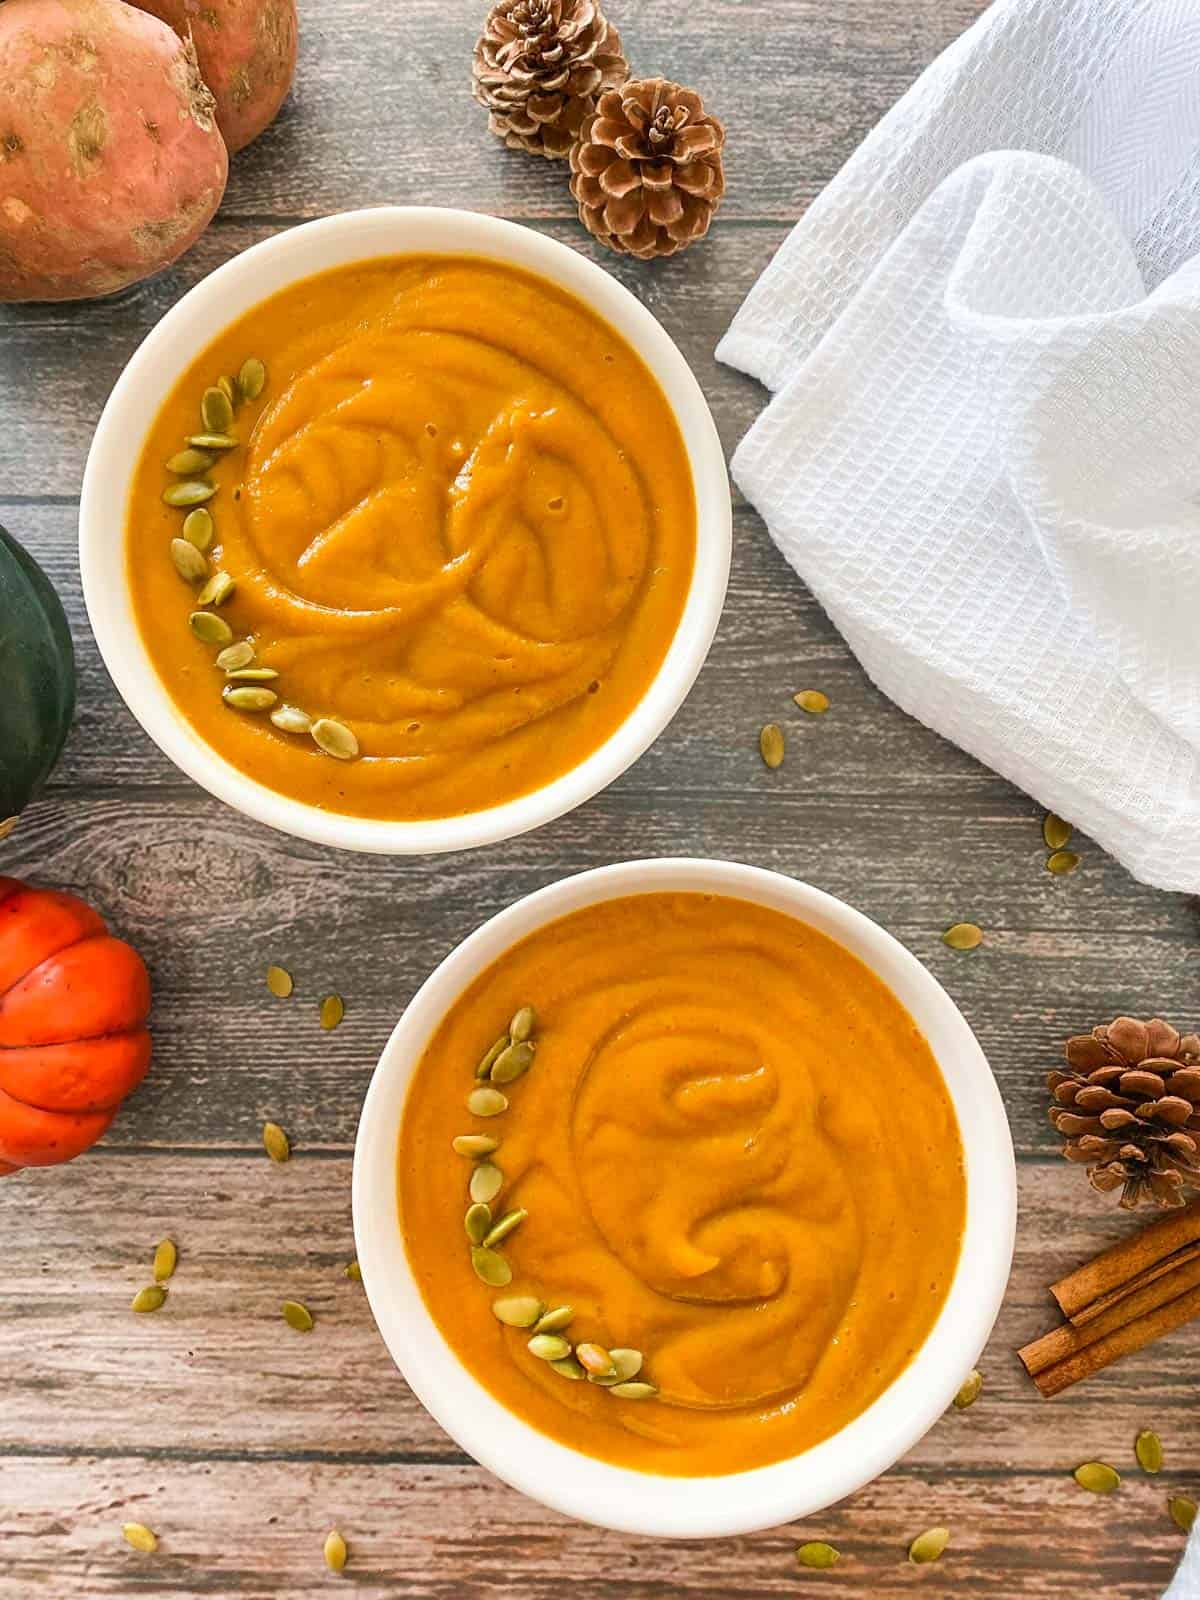 Easy healthy vegan pumpkin recipes [sweet and savoury]